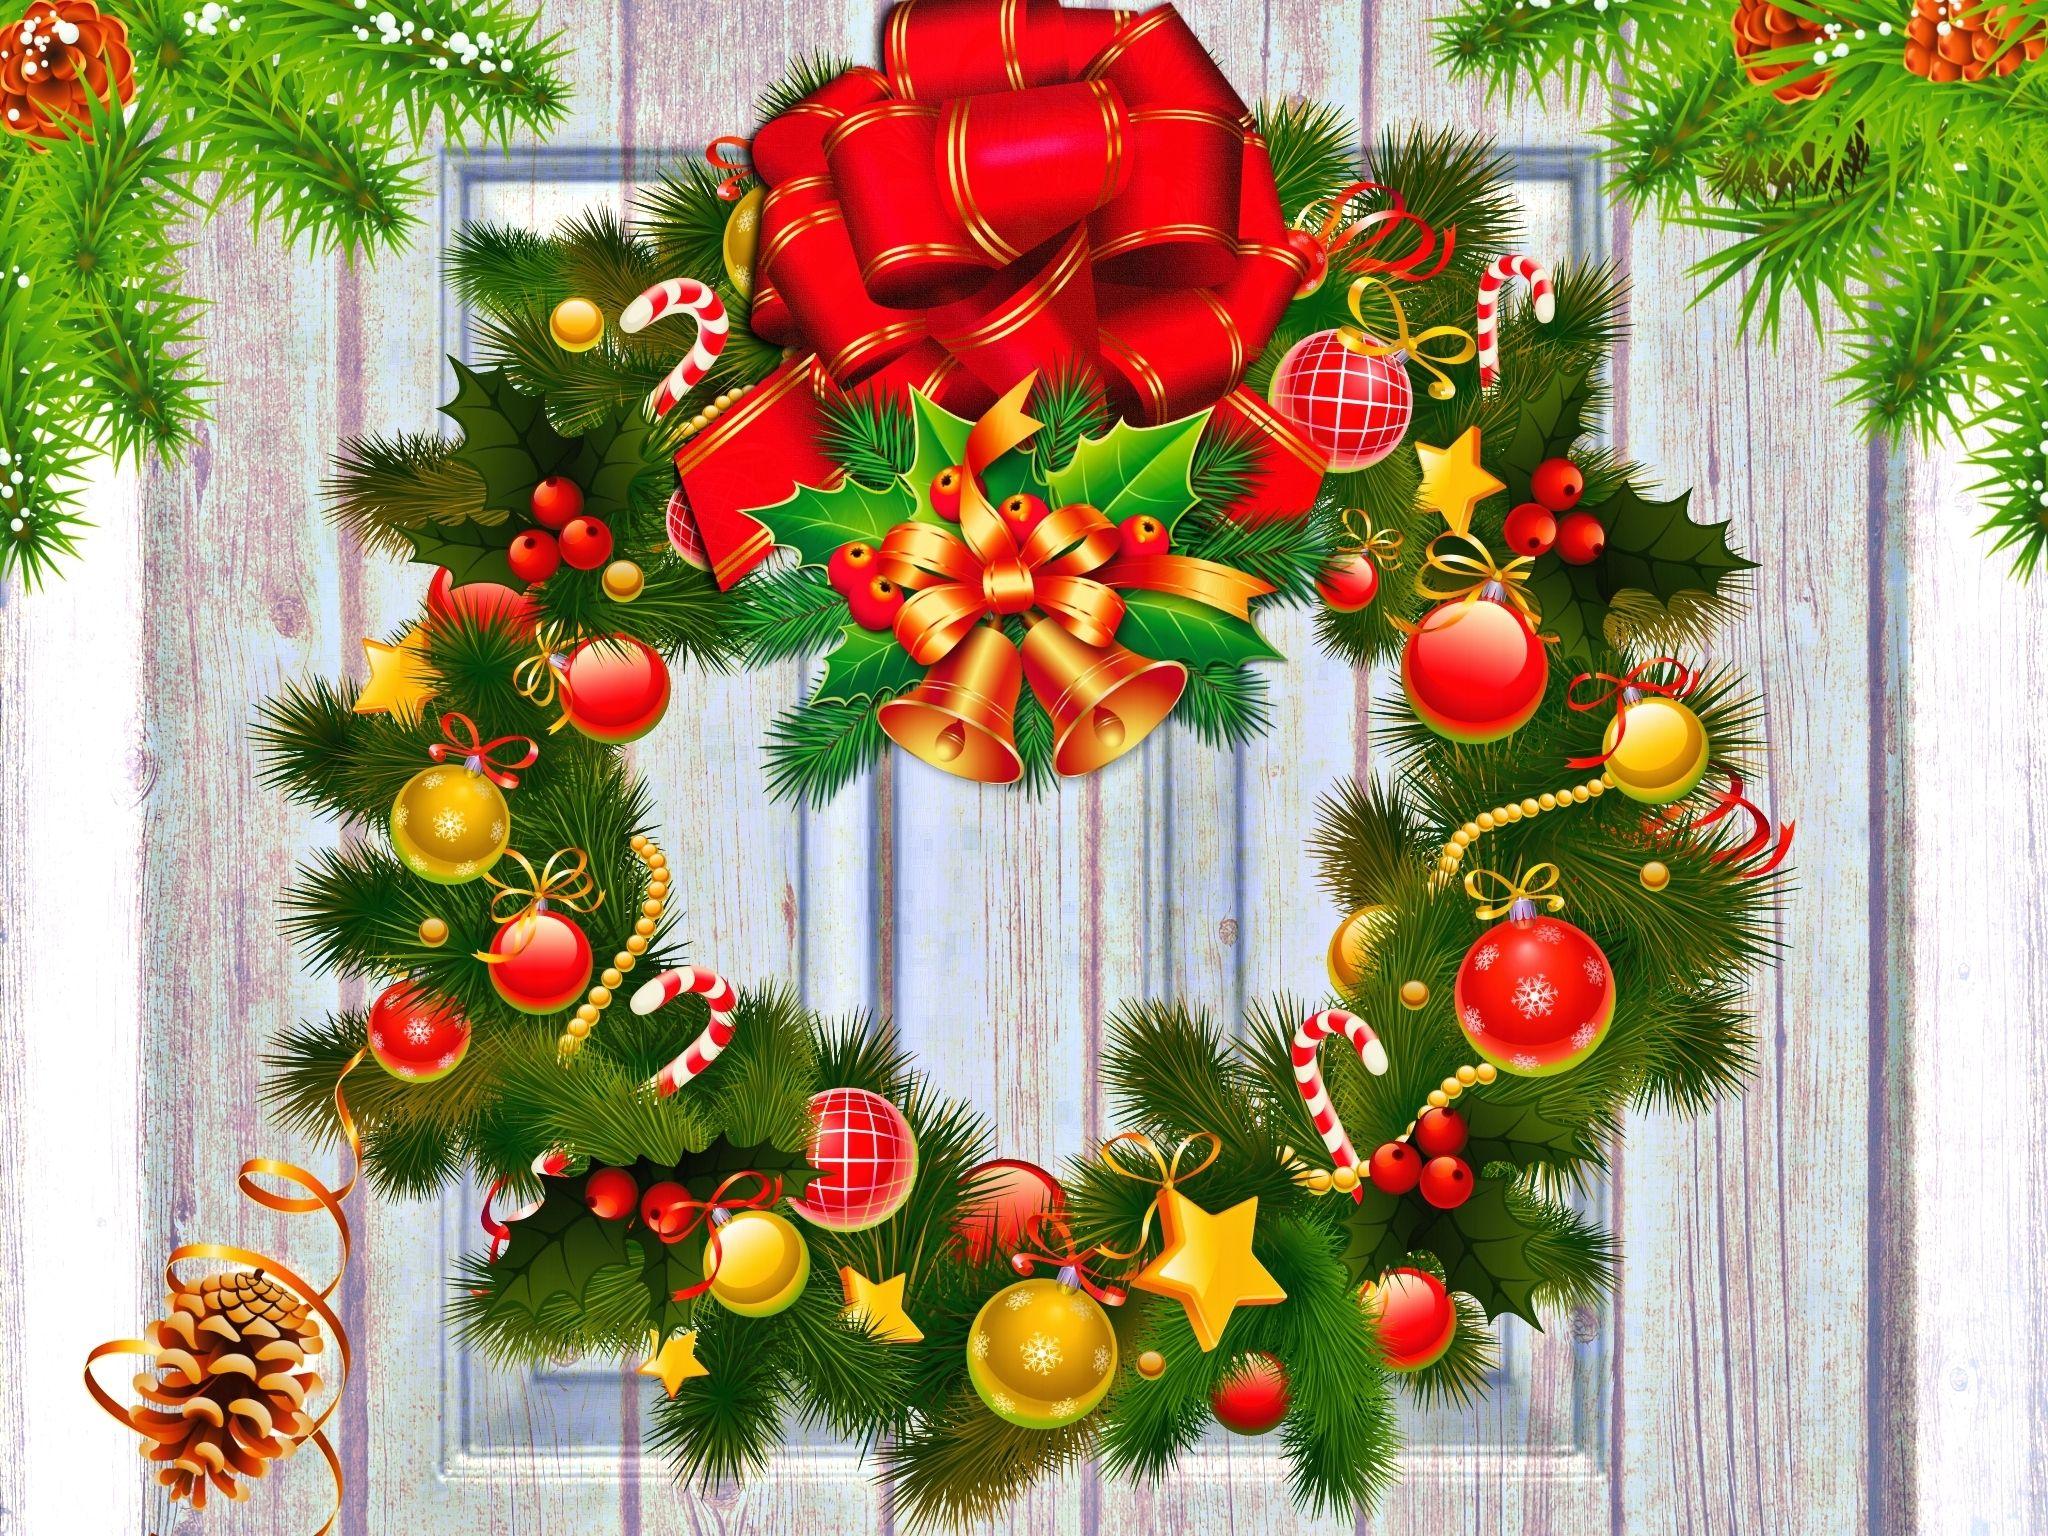 Christmas Wreath On Door Wallpaper, PC, Lap Christmas